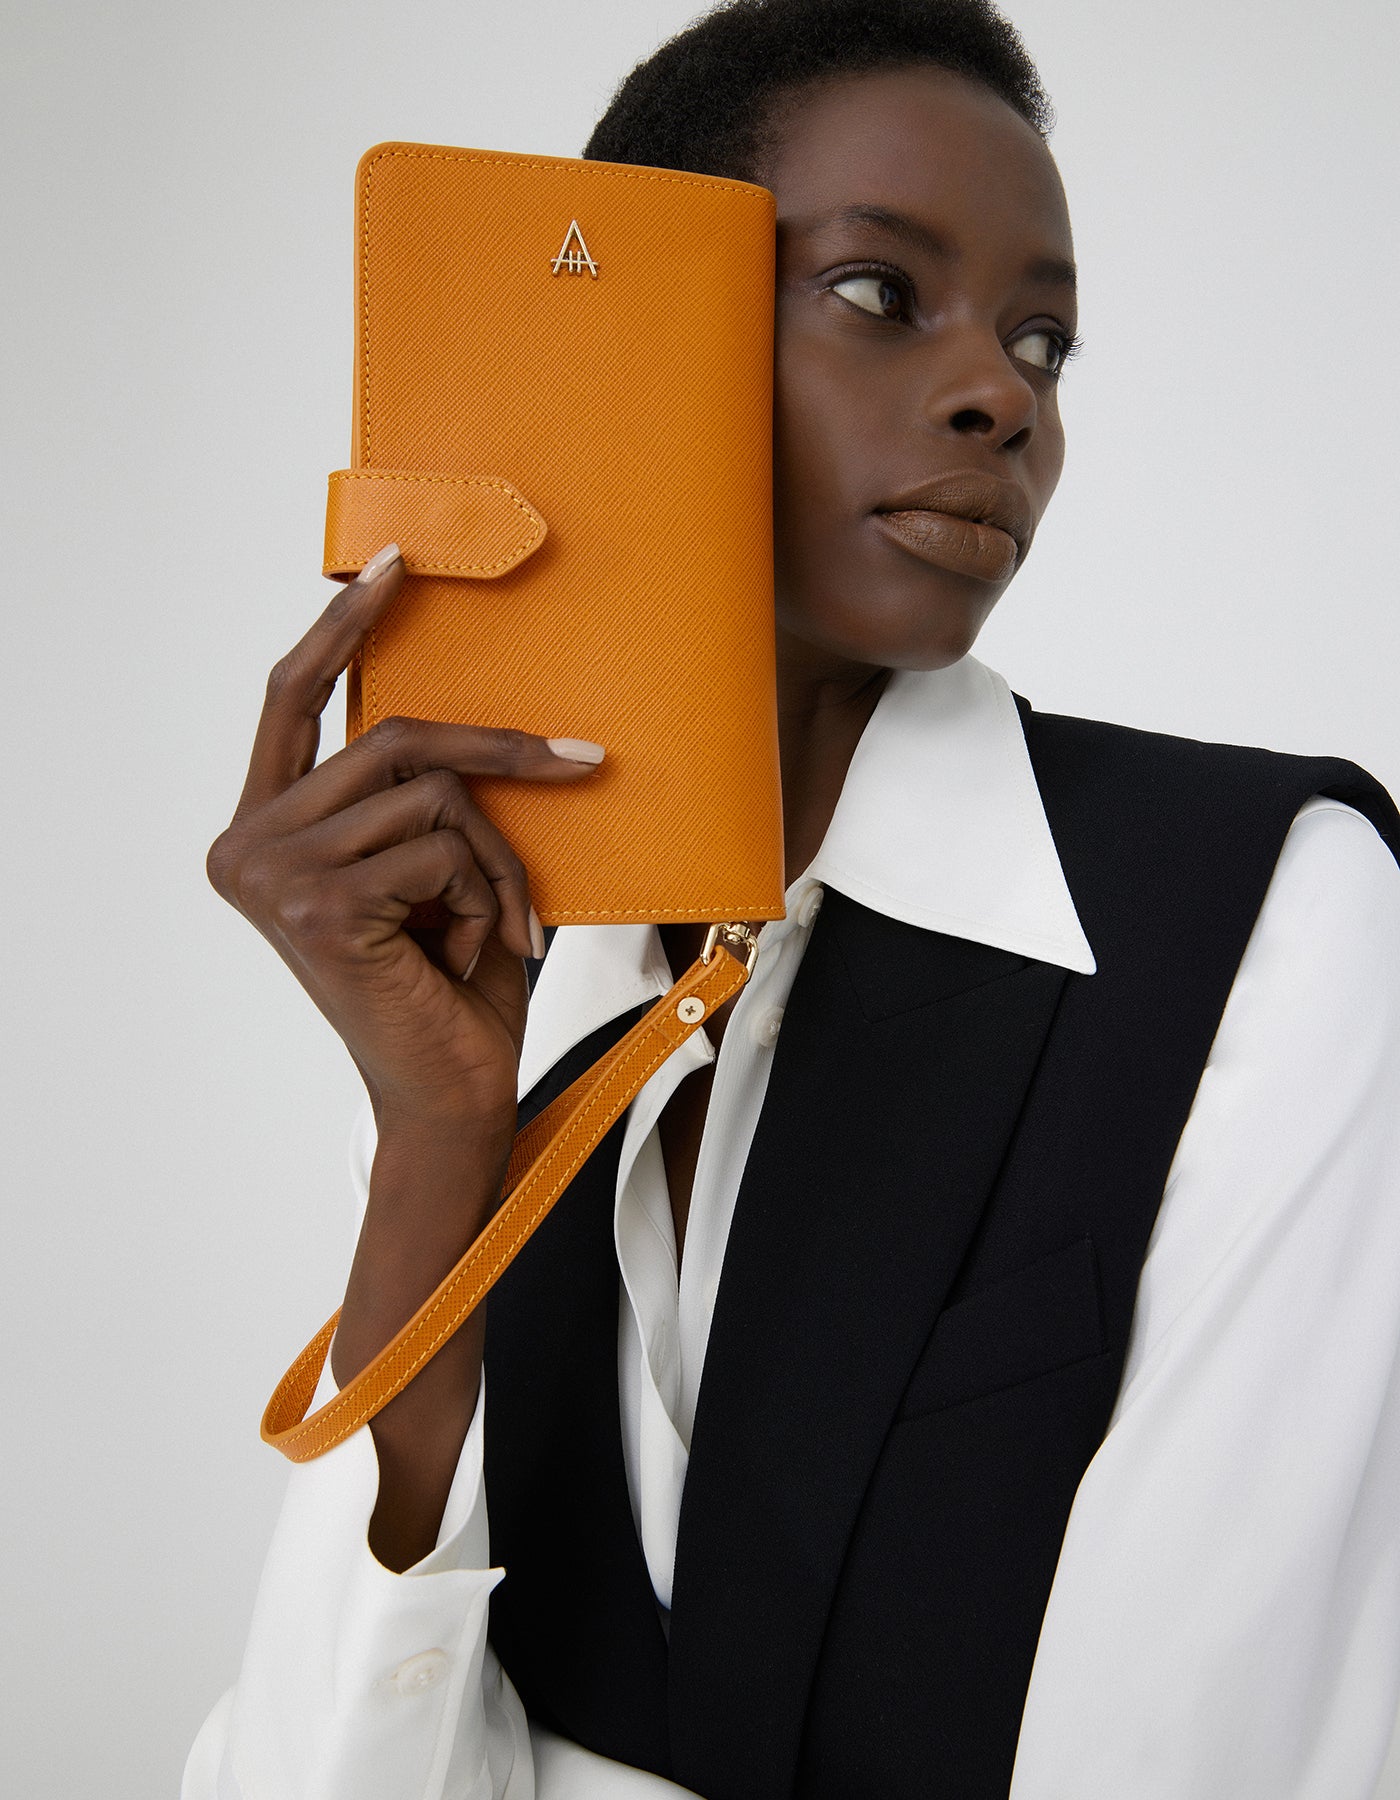 HiVa Atelier - Ita Crossbody Bag and Wallet Burnt Orange